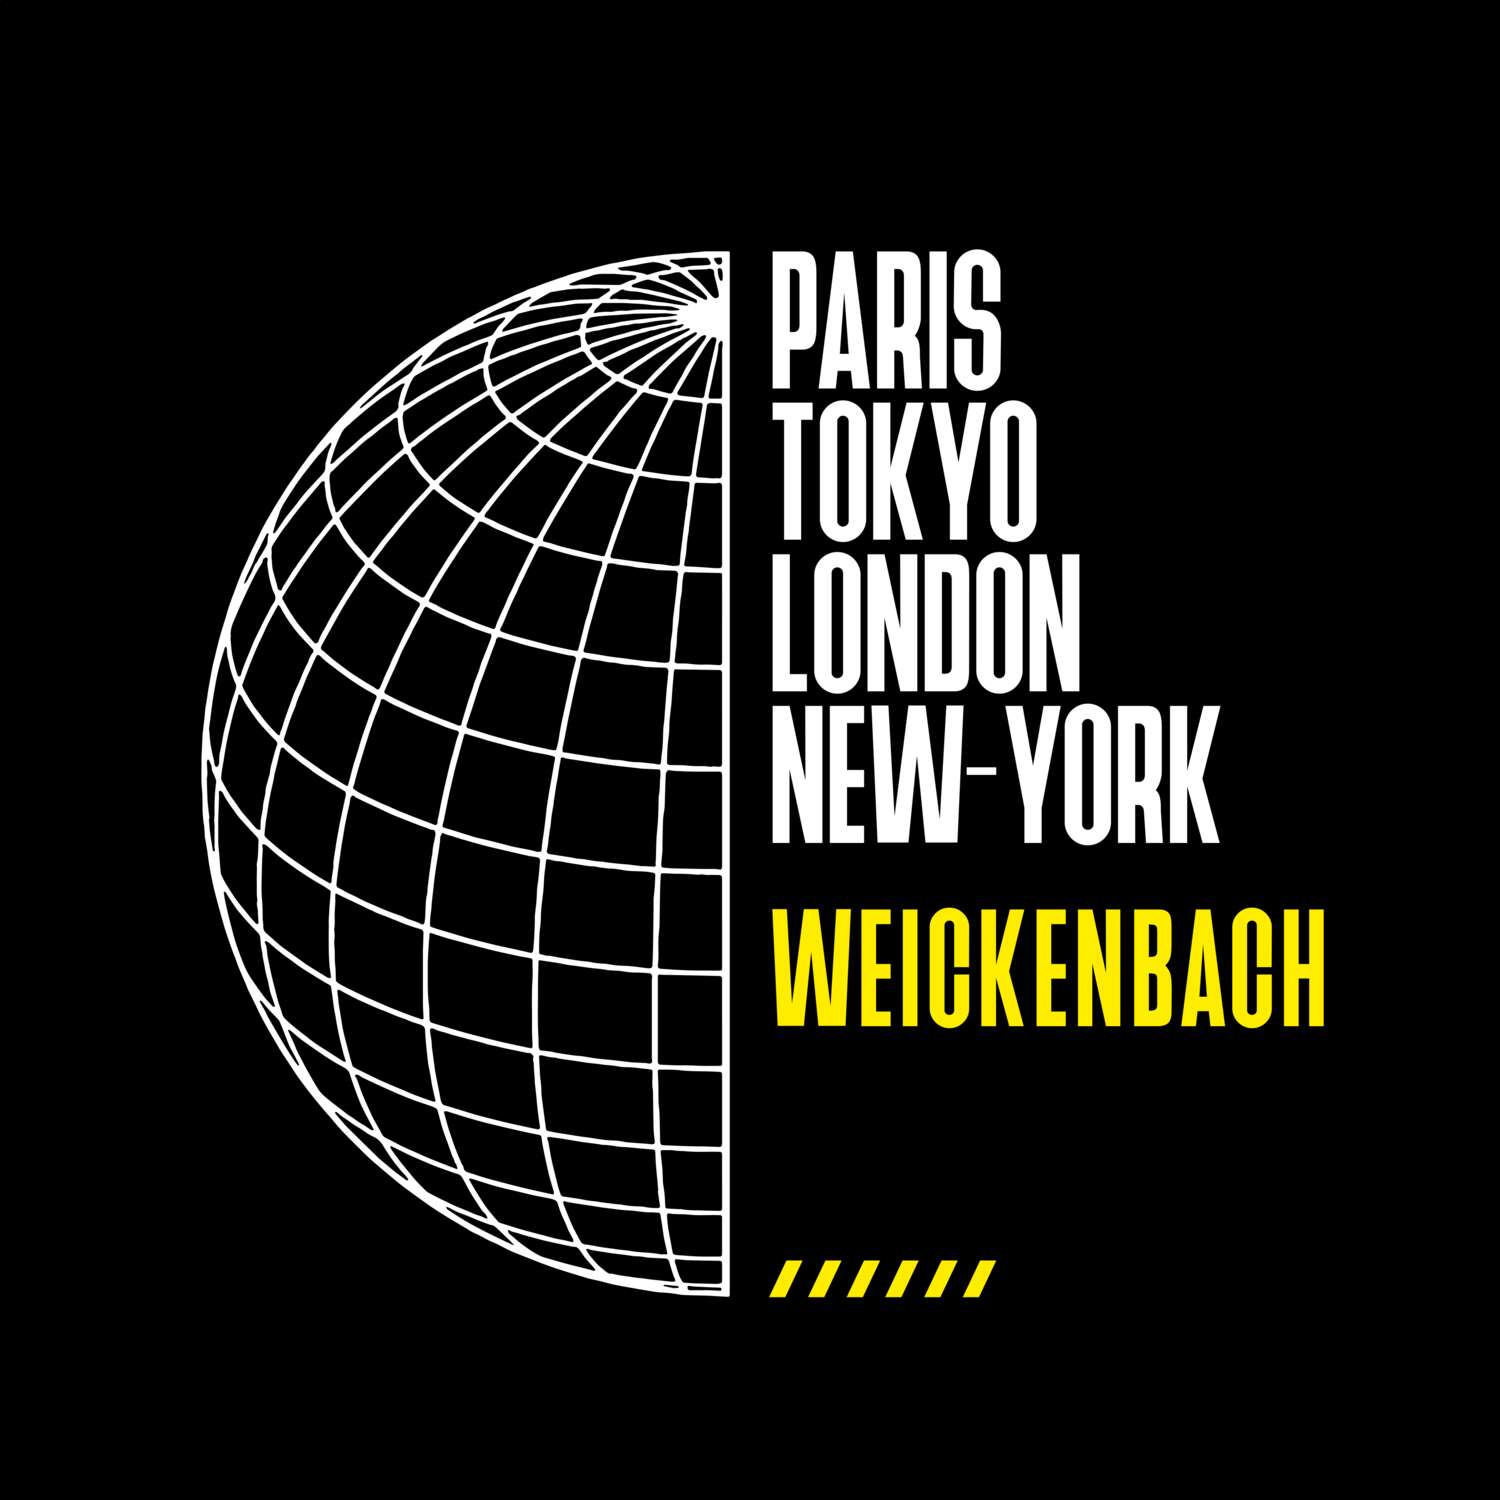 Weickenbach T-Shirt »Paris Tokyo London«